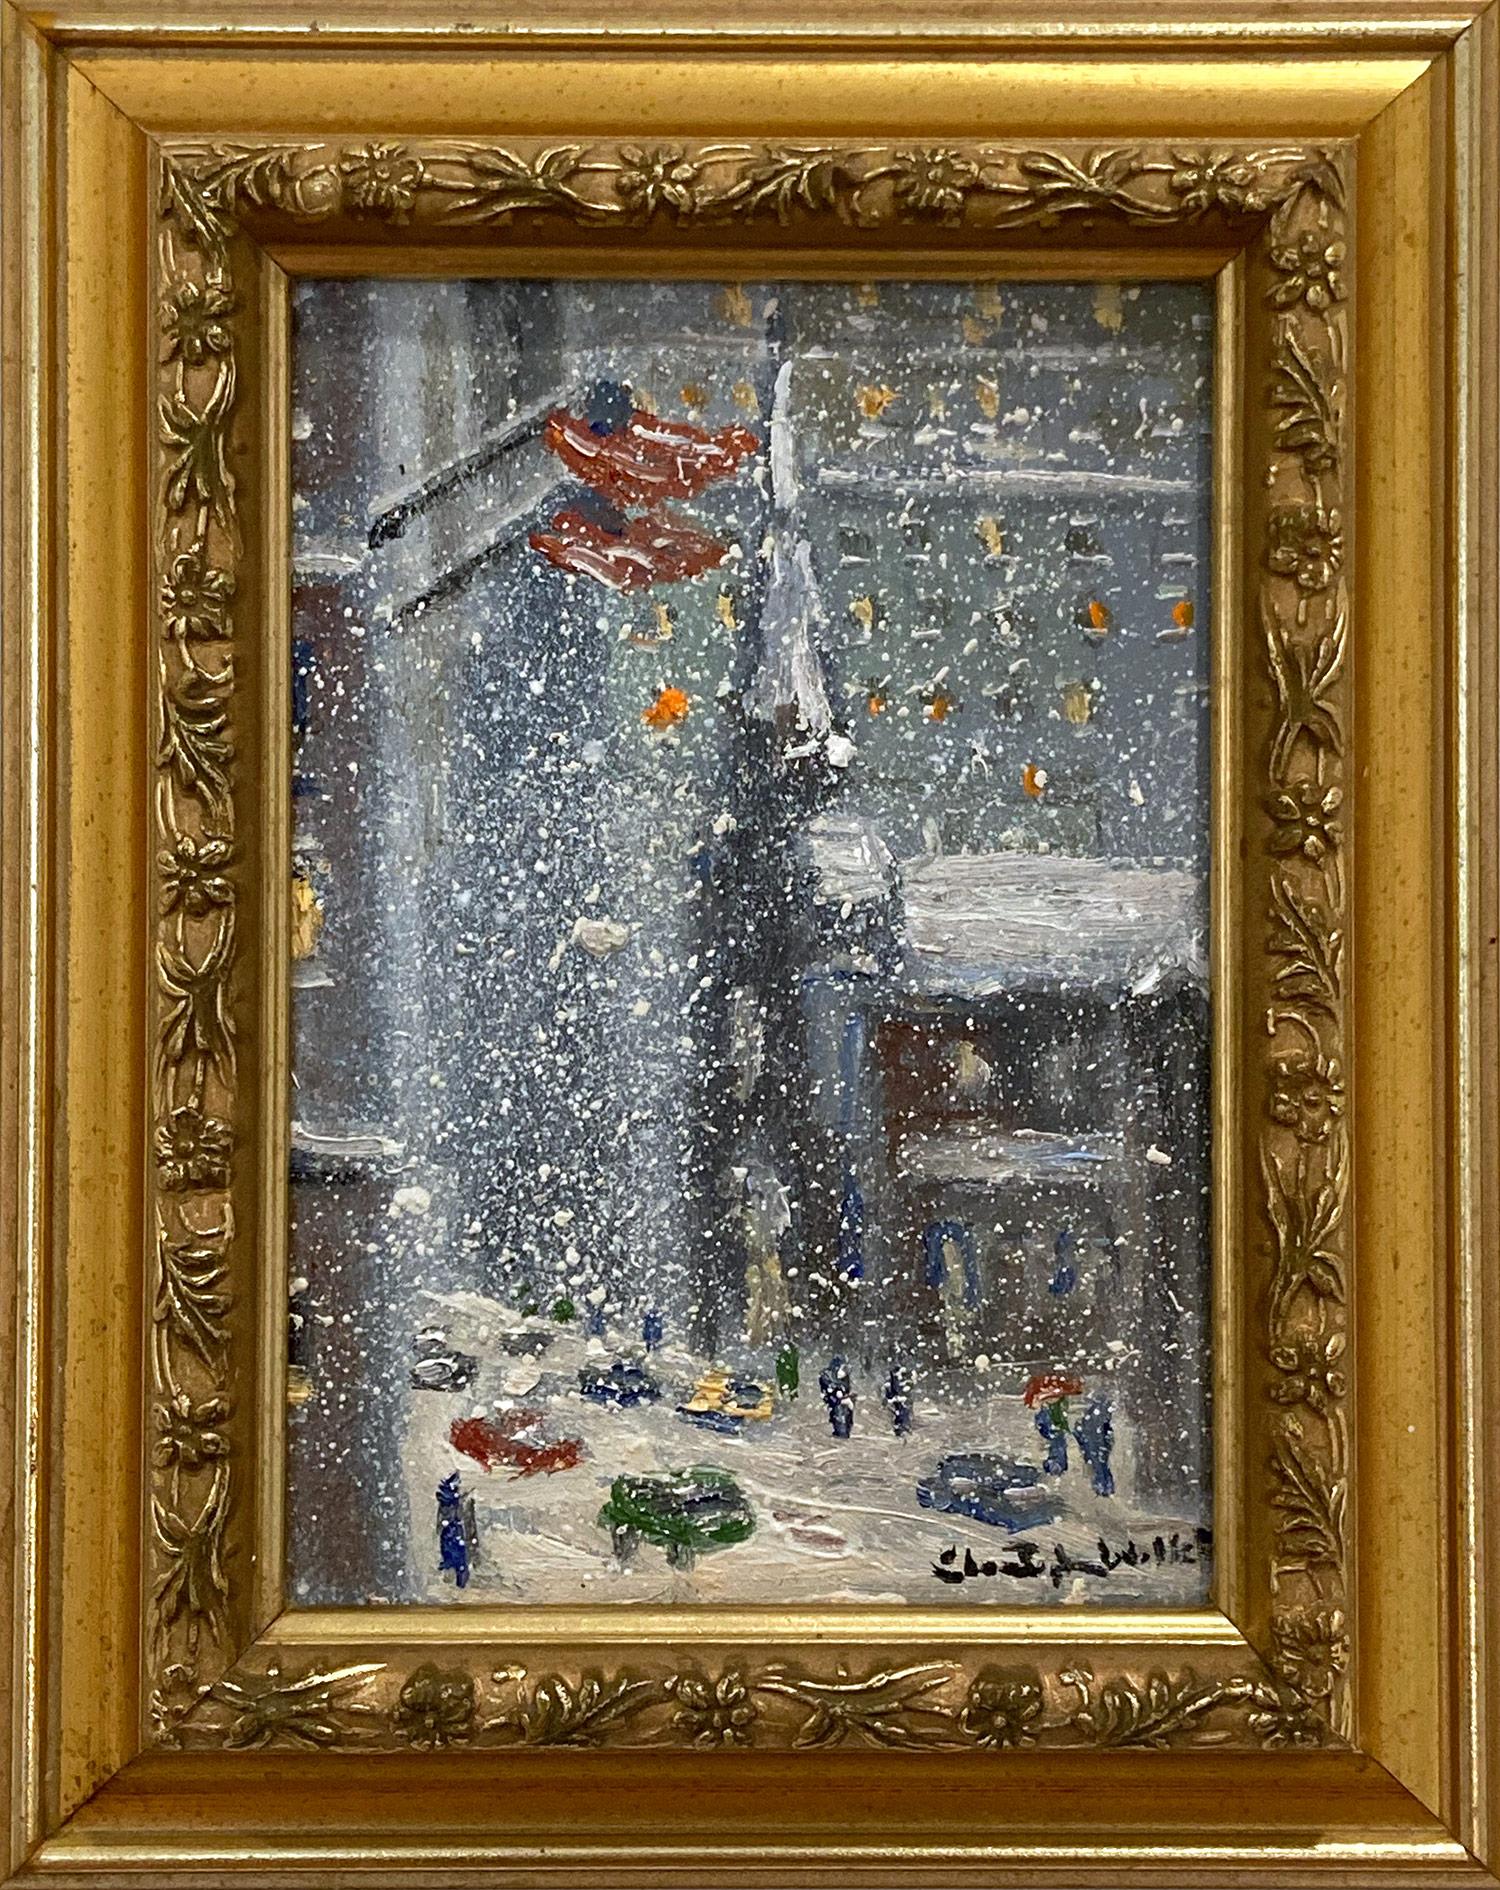 Christopher Willett Figurative Painting - "Trinity Church" New York City Impressionist Winter Snow Scene Oil Painting